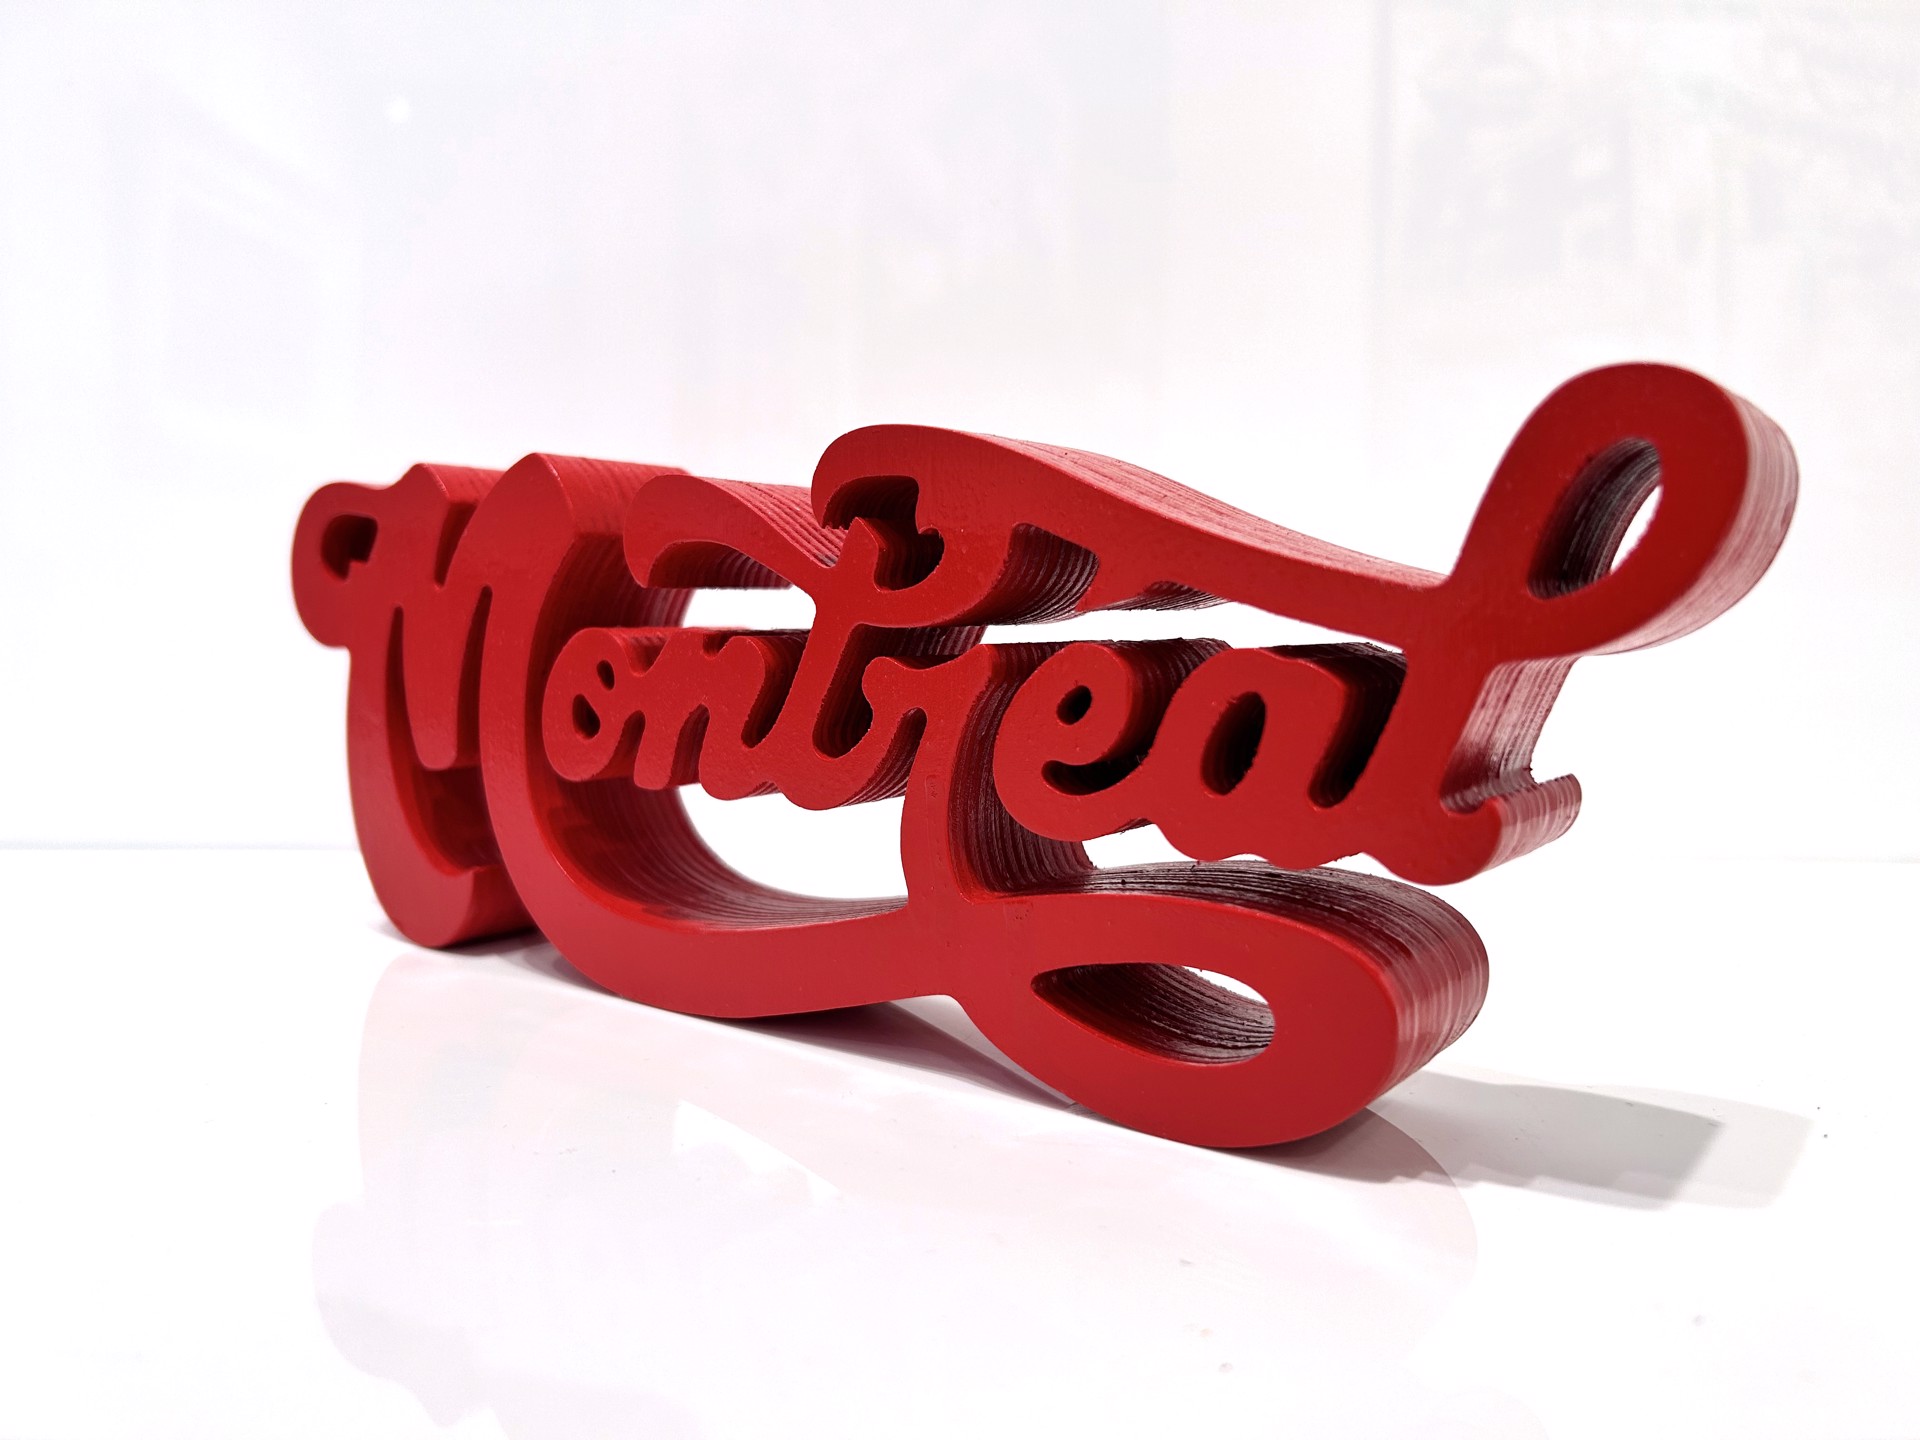 Montreal Sculpture (Red) by Jason Wasserman